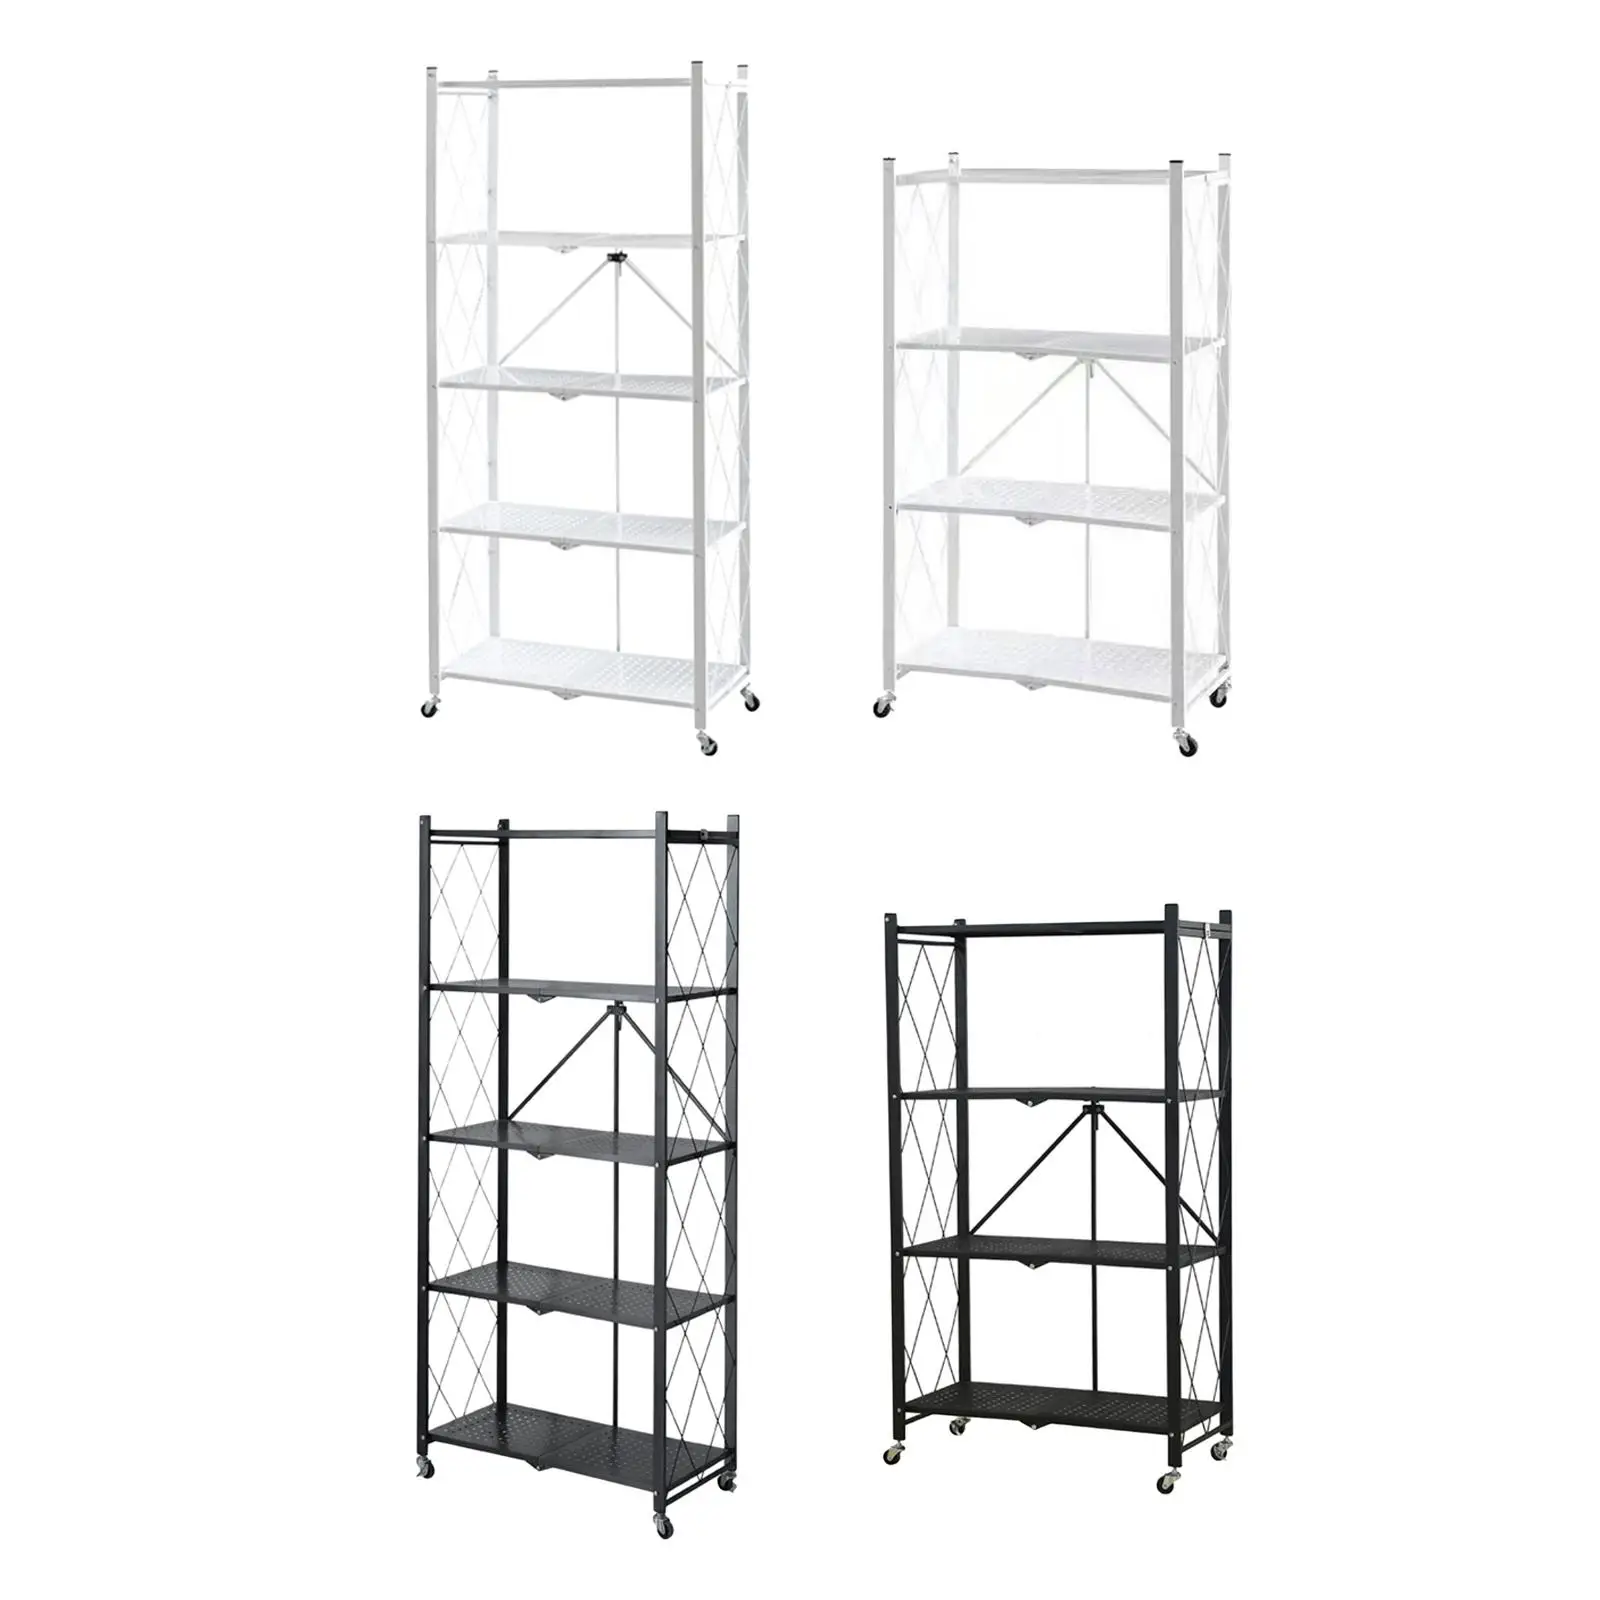 Foldable Bookshelf Display Shelving Units Organization Cart Organizer Corner Shelf Kitchen Cart with Caster Wheels for Home